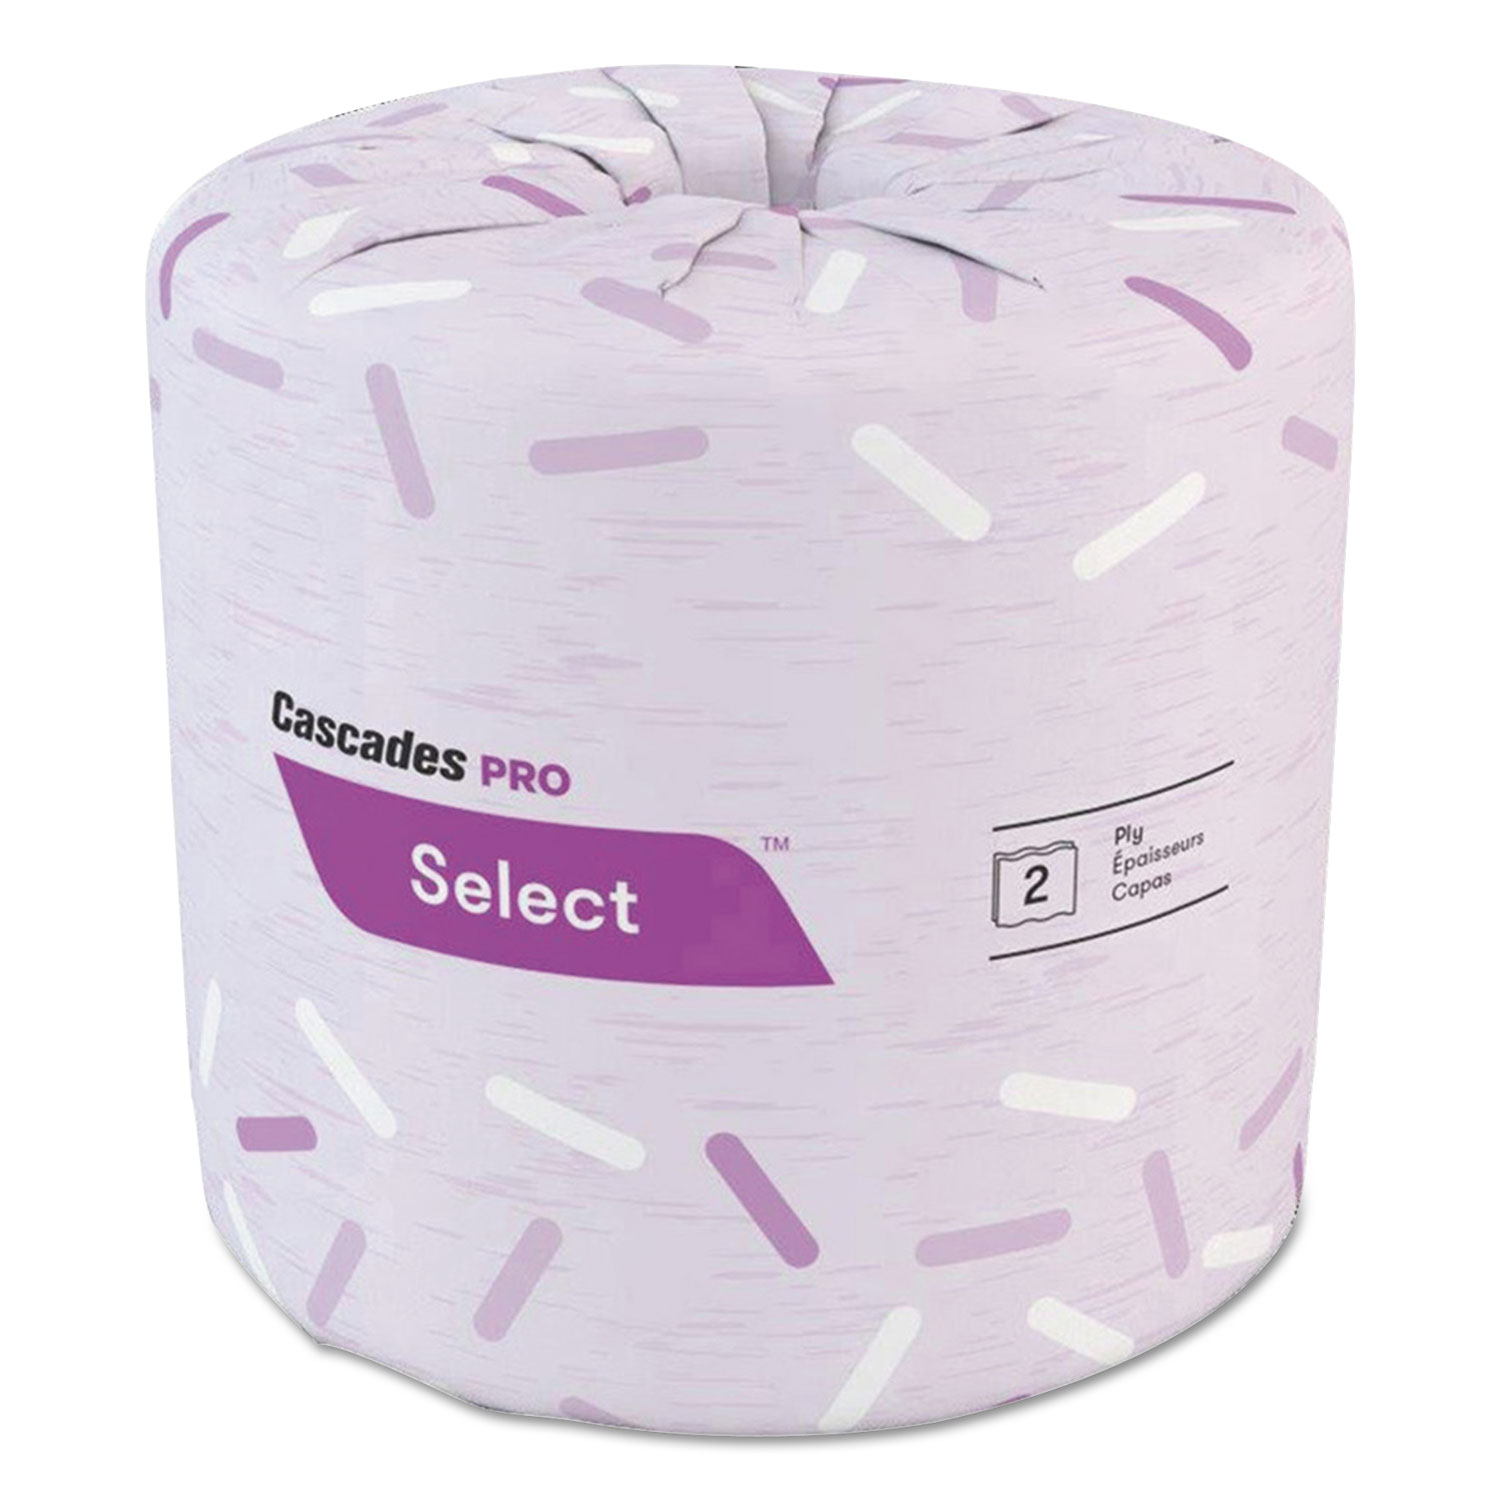  Cascades PRO B041 Select Standard Bath Tissue, 2-Ply, White, 4.25 x 3.25, 500 Sheets/Roll, 96 Rolls/Carton (CSDB041) 